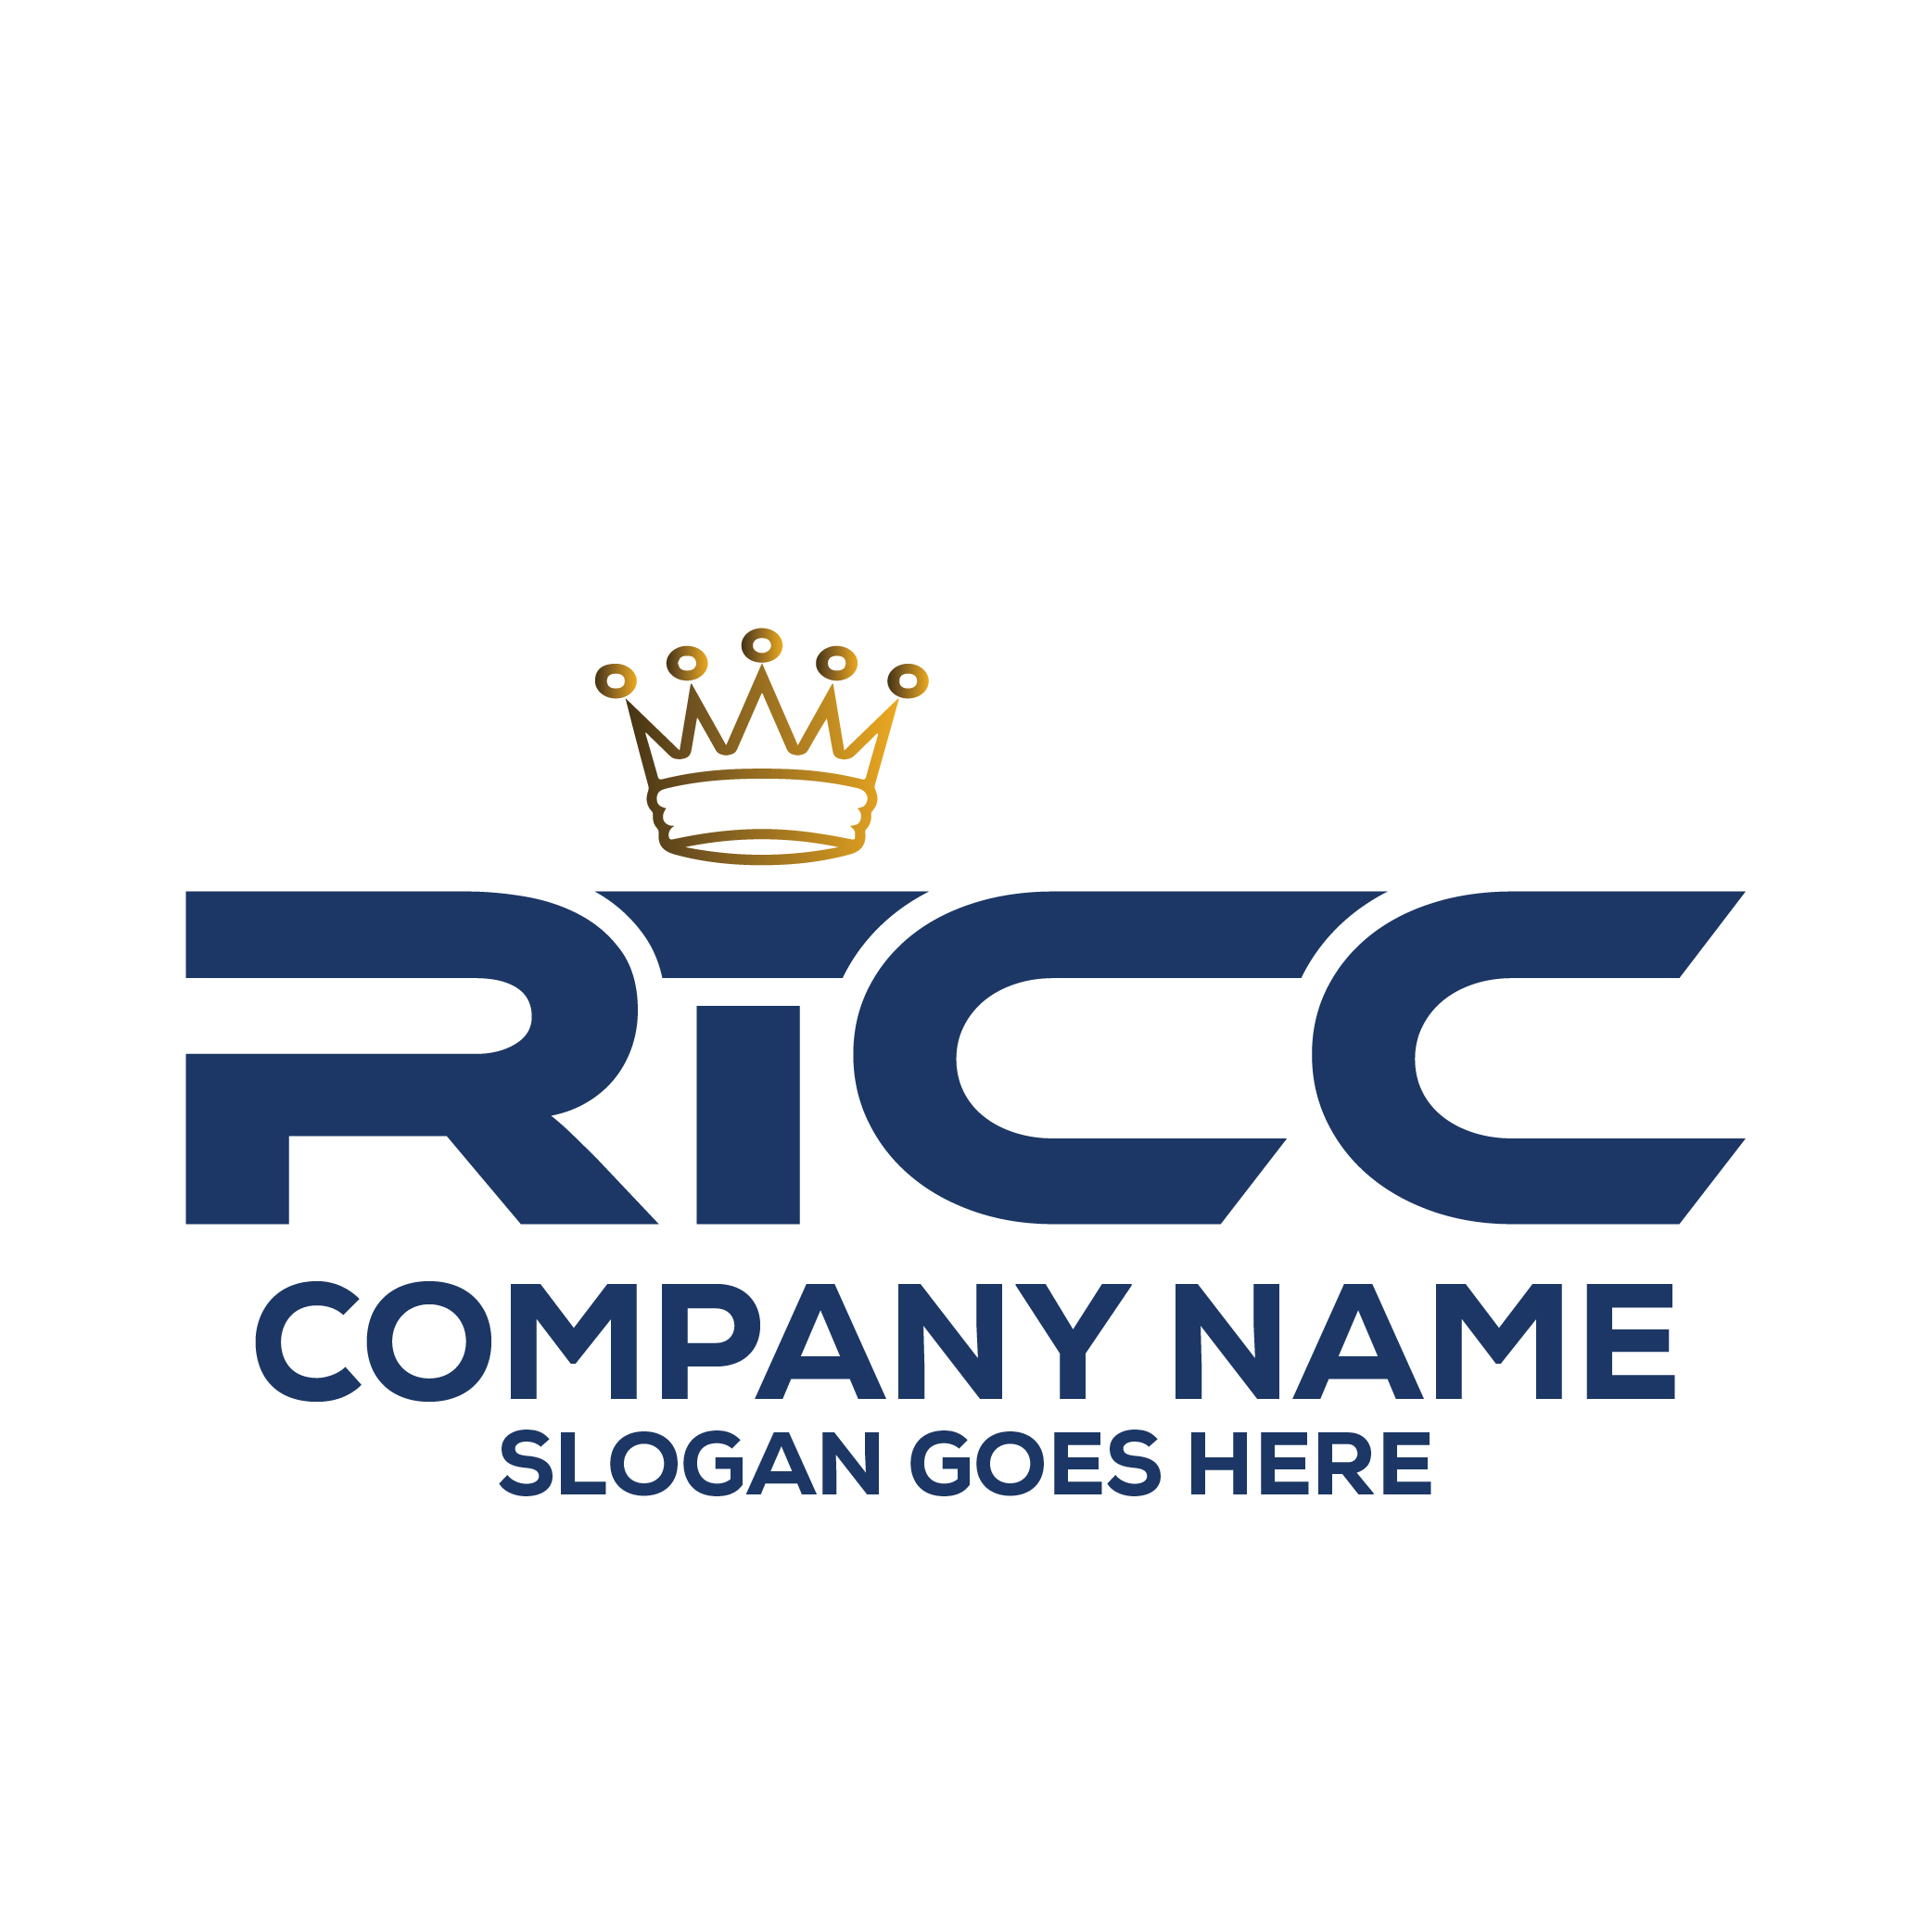 Letter RTCC Logo Design Vector Image Template cover image.